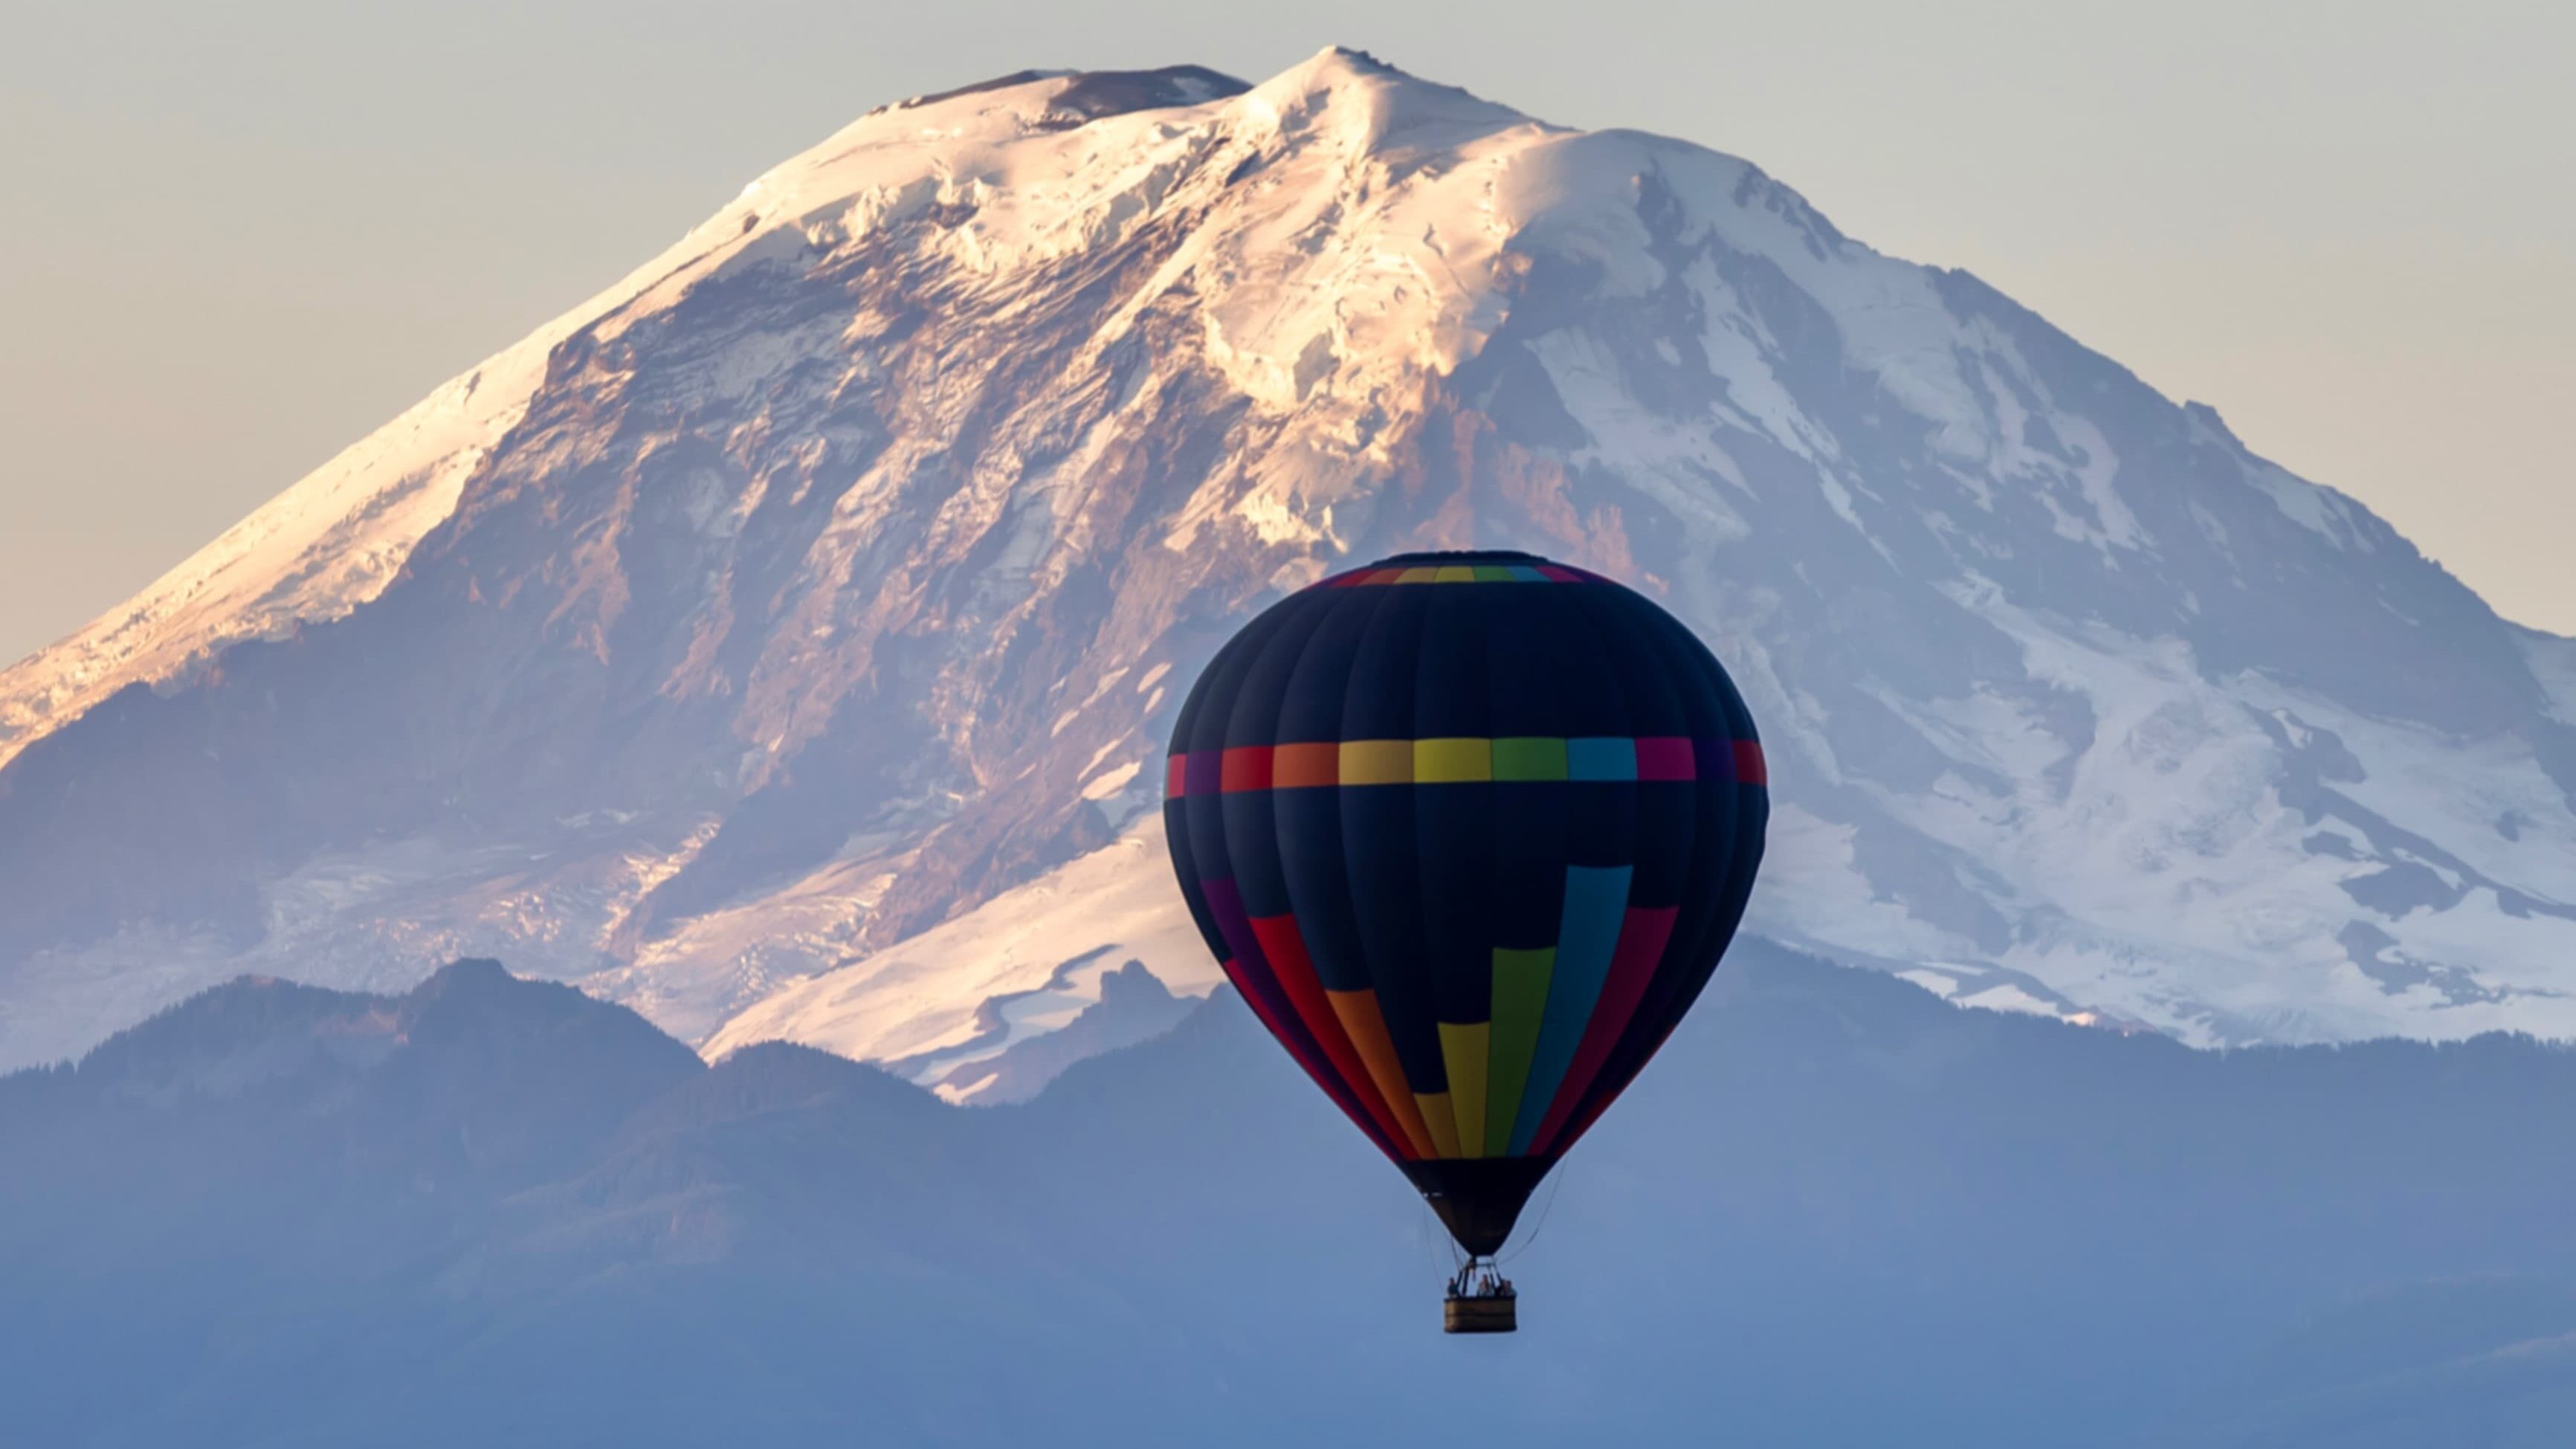 How high do hot air balloons fly